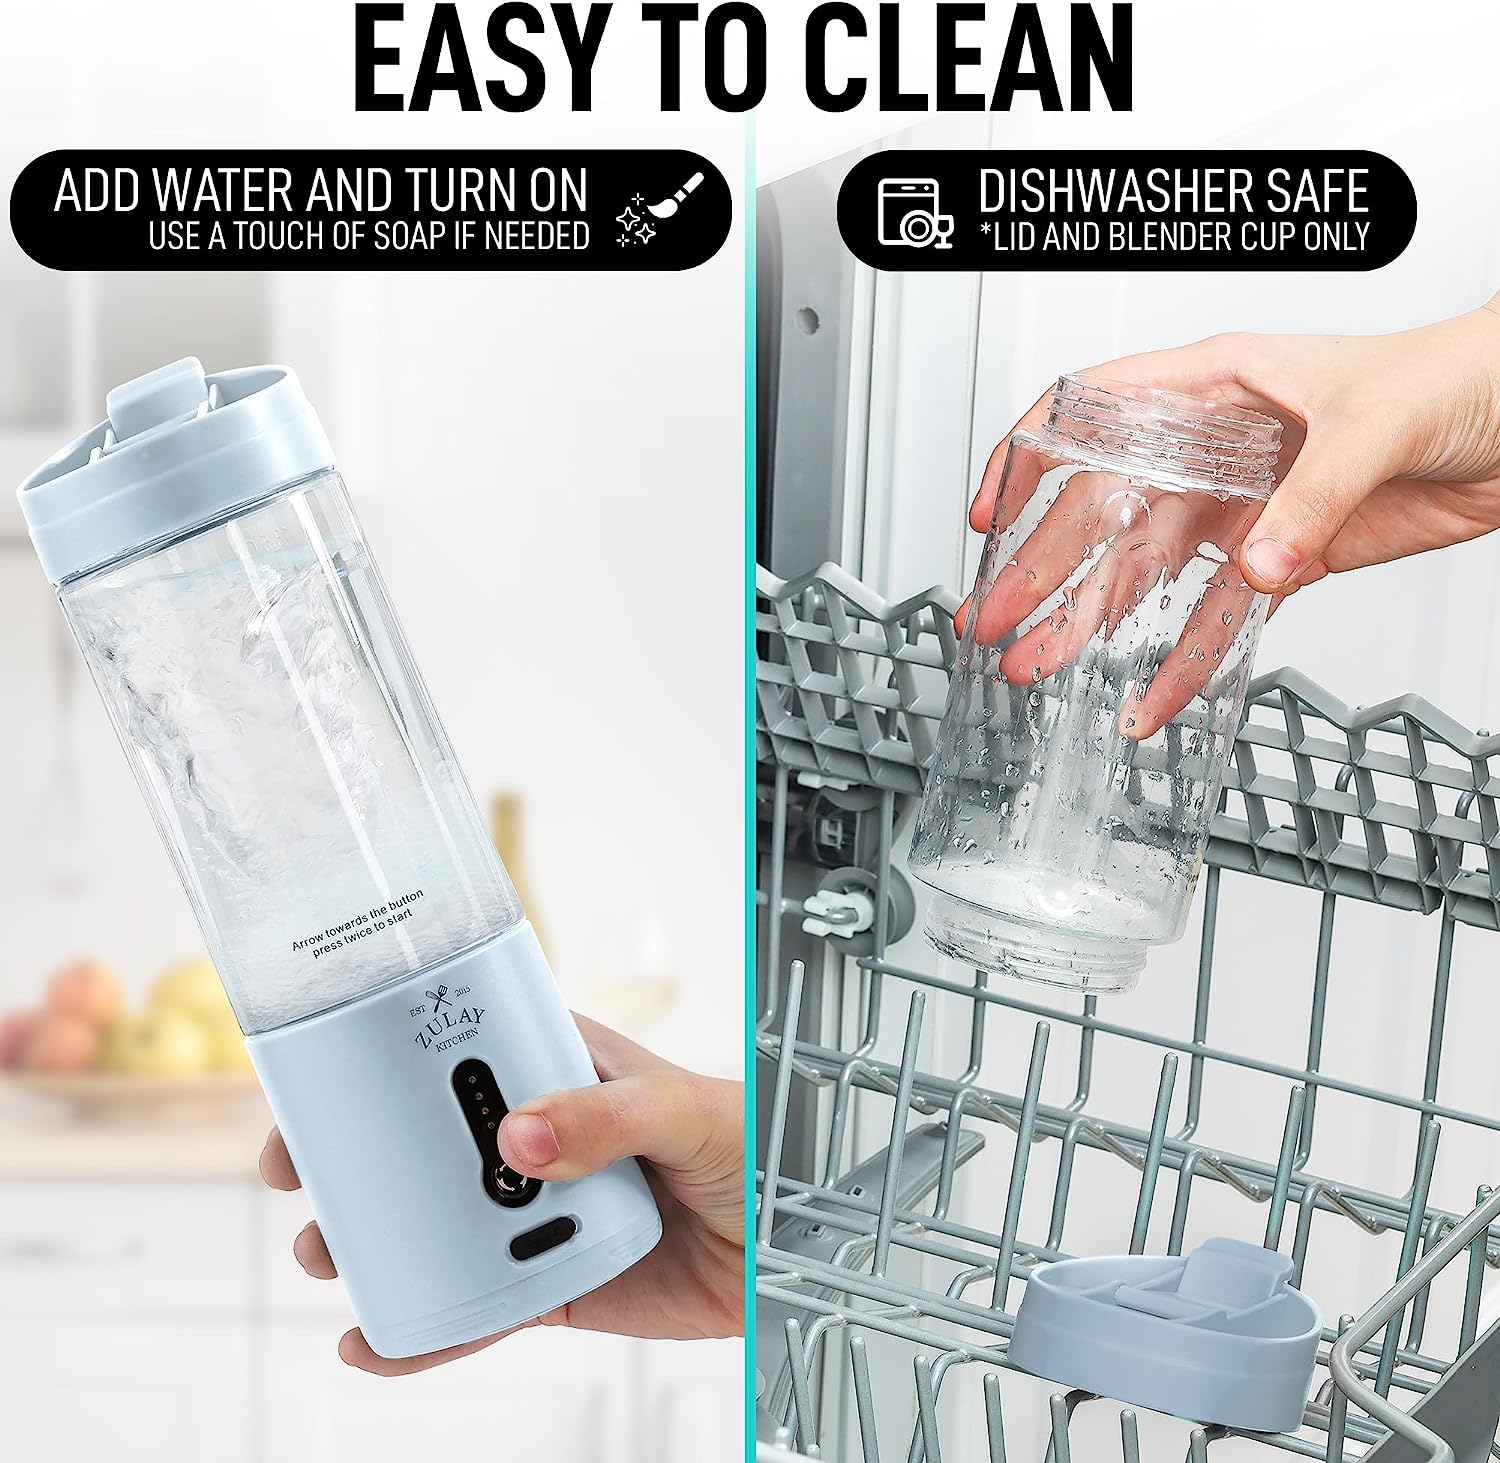  Zulay Kitchen Personal blender is dishwasher safe